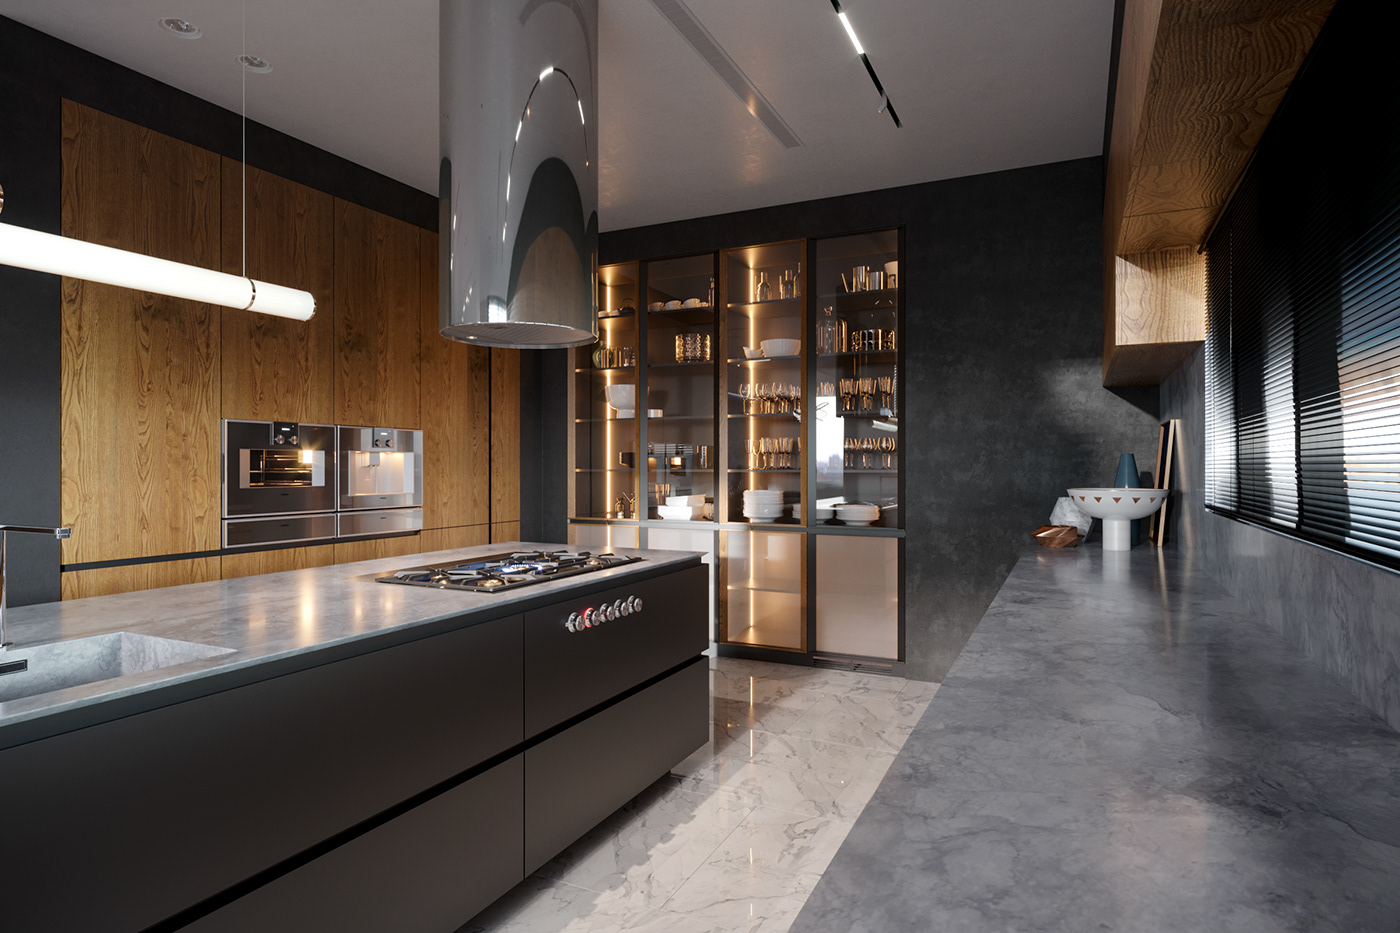 vibe apartment Interior kitchen newyork visualization rendering 3D floorplan